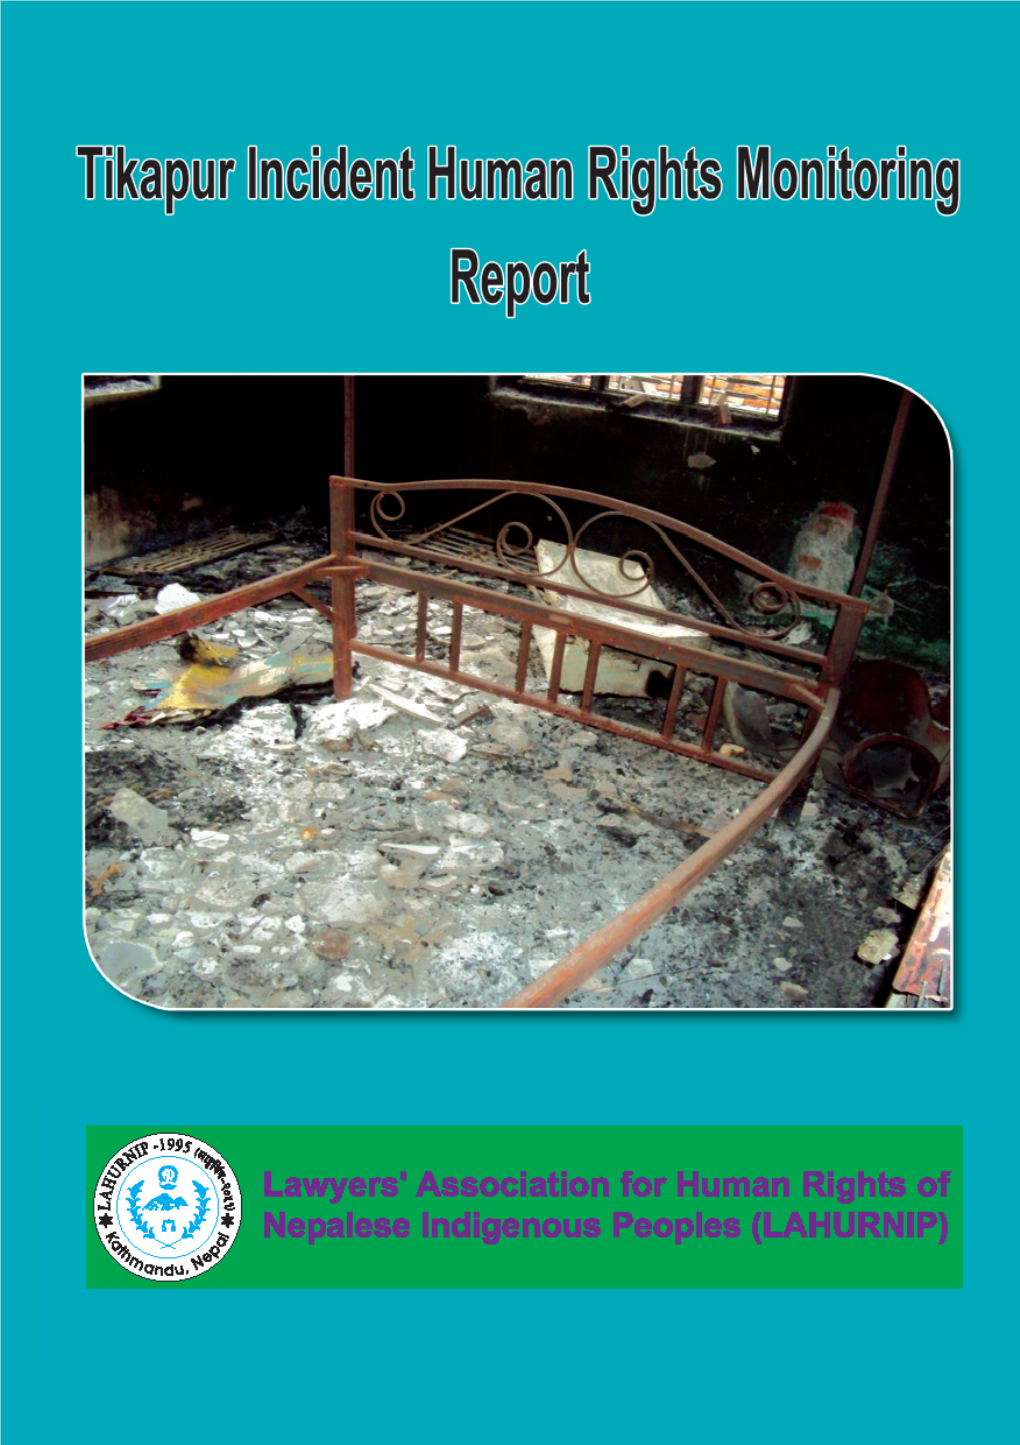 Tikapur Incident Human Rights Monitoring Report Tikapur, Kailali, Nepal 23-26 March 2016